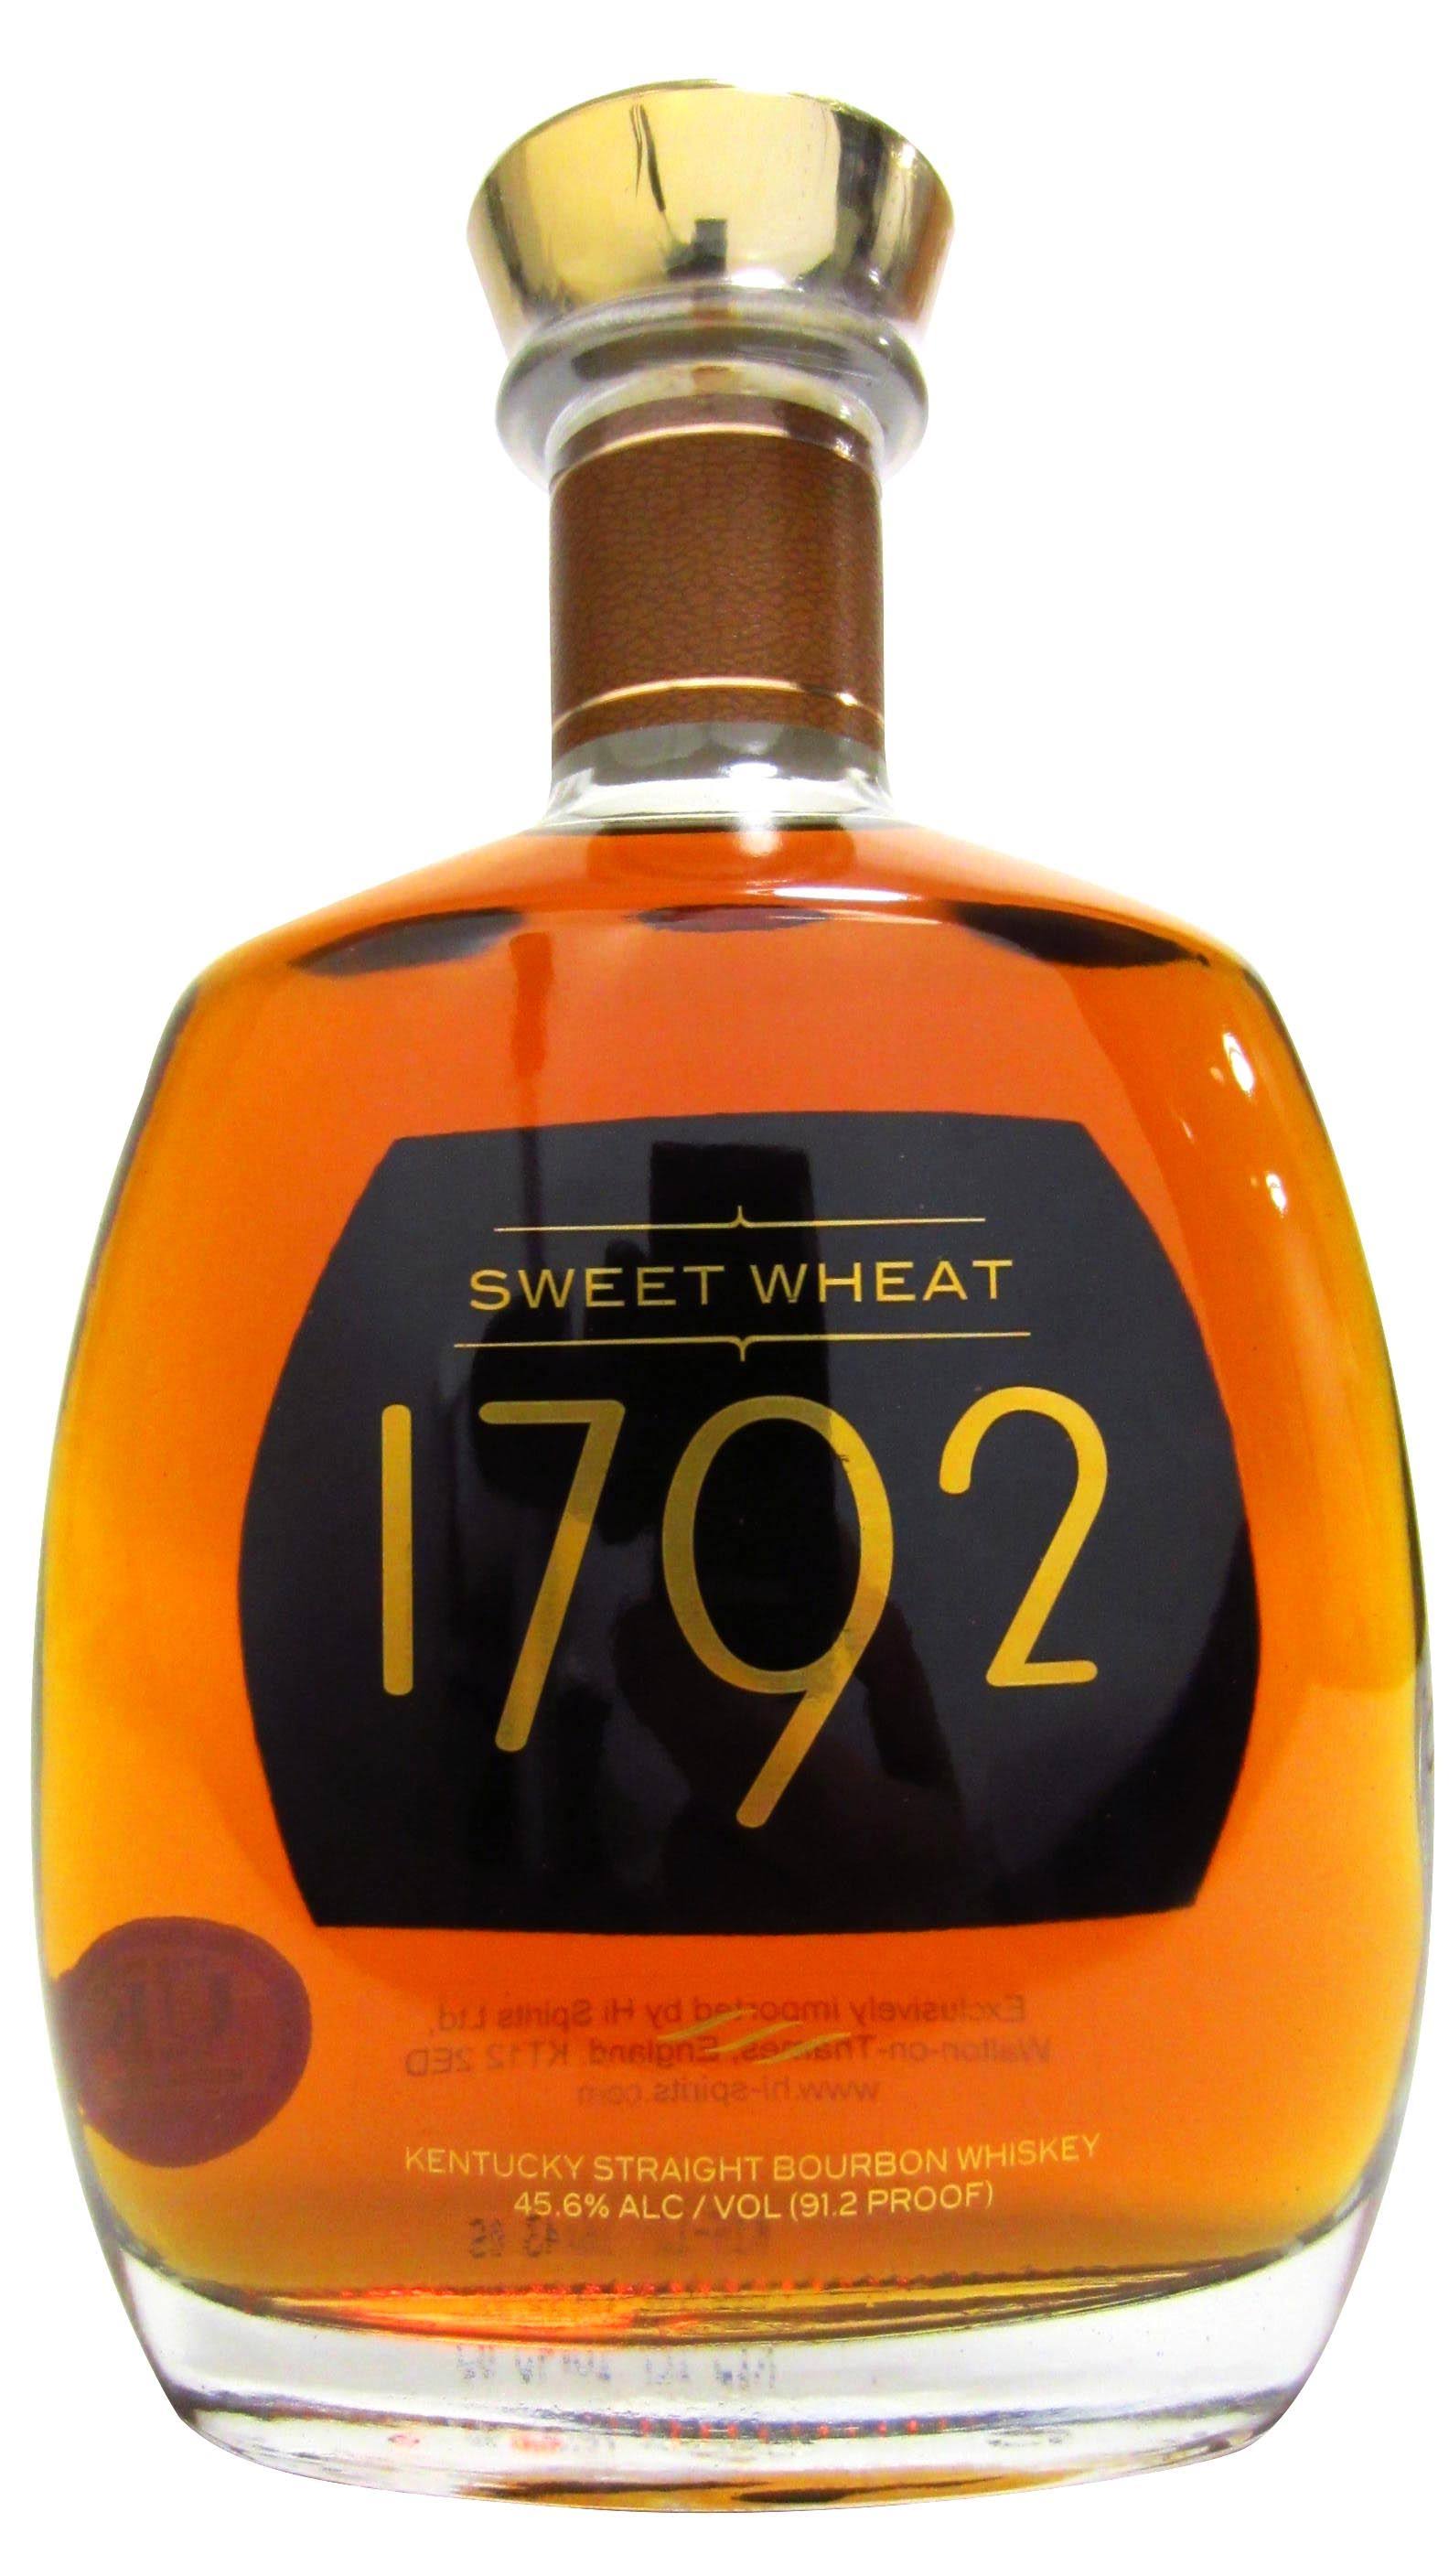 1792 Sweet Wheat Kentucky Straight Bourbon Whiskey - 750ml